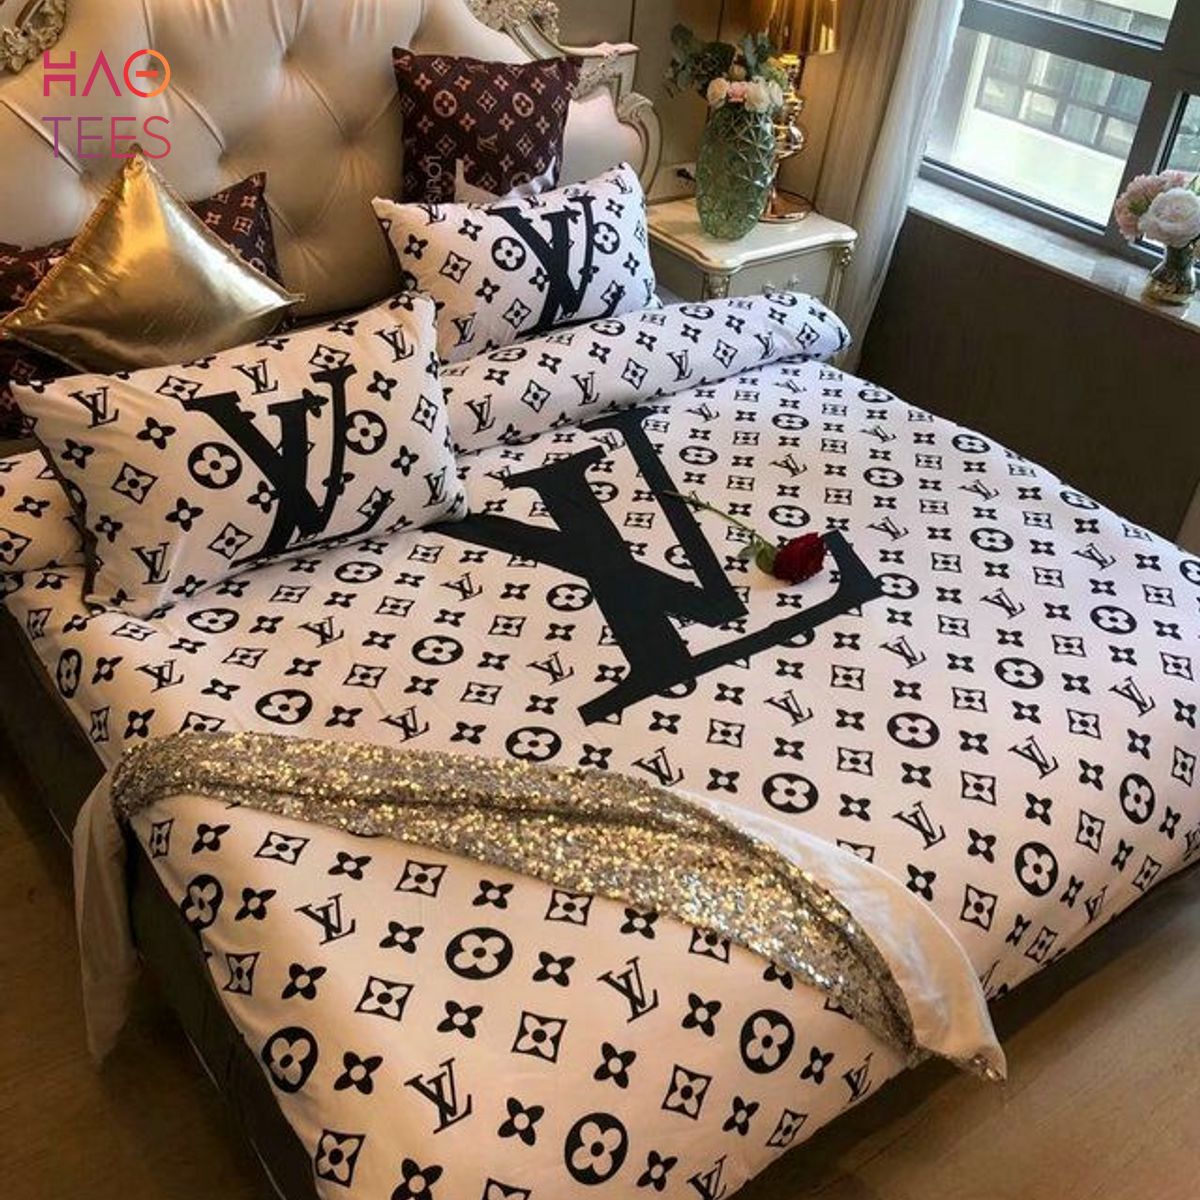 Lv 15 bedding sets duvet cover bedroom luxury brand bedding